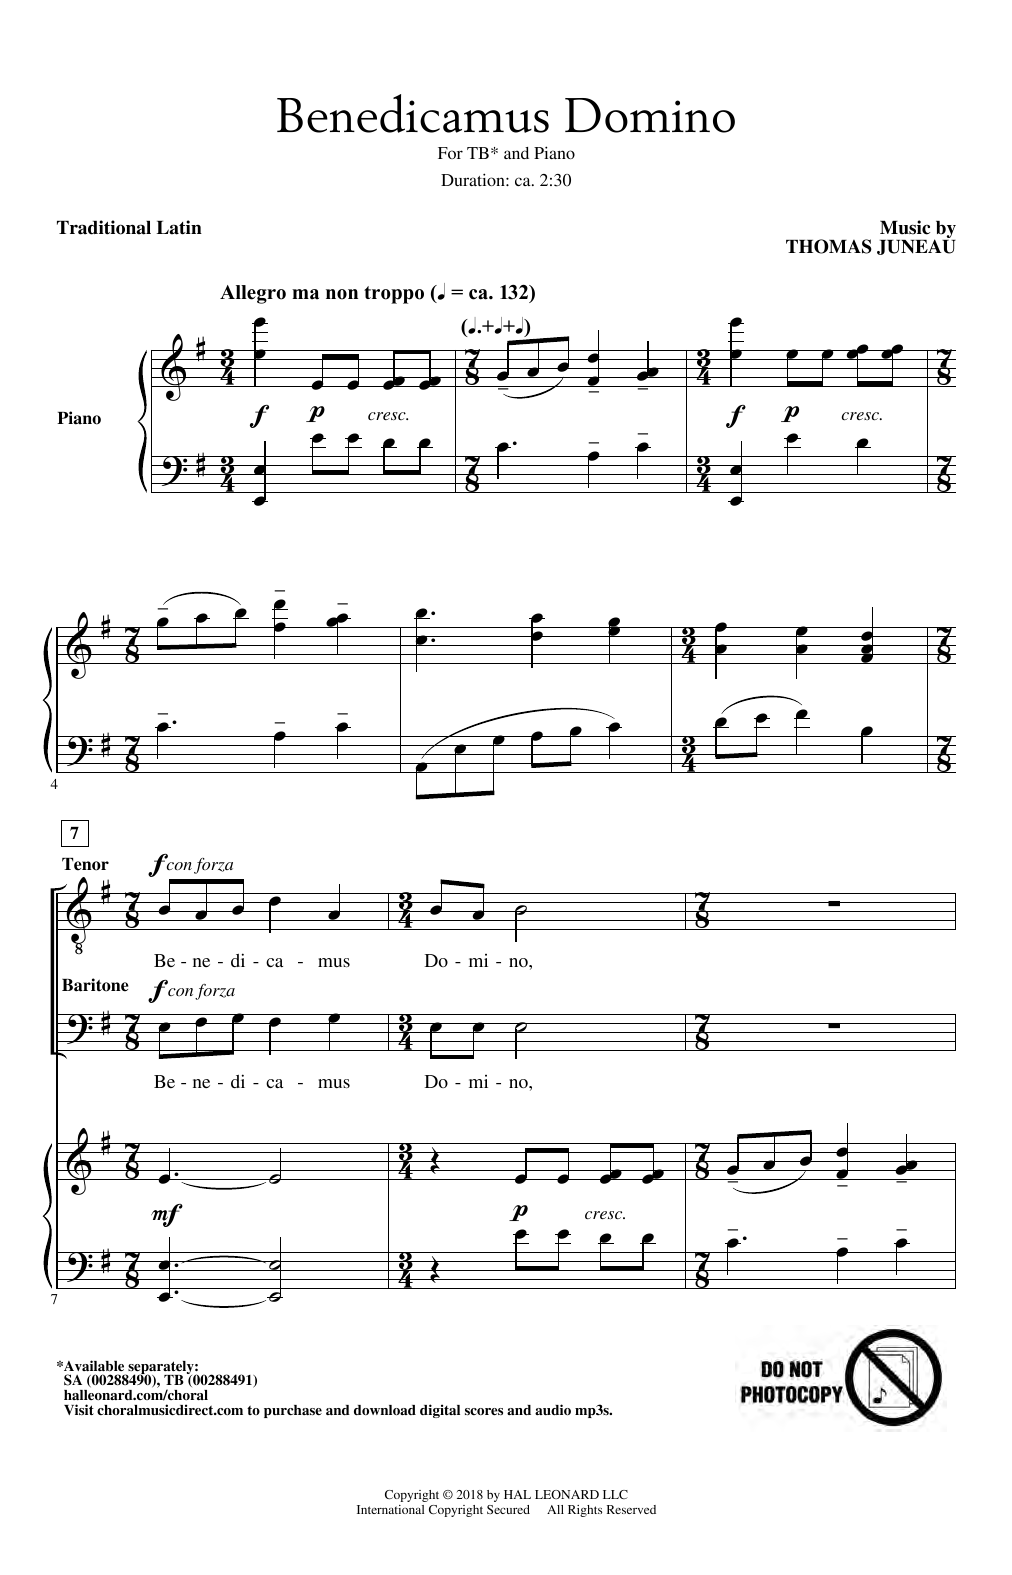 Thomas Juneau Benedicamus Domino Sheet Music Notes & Chords for TB - Download or Print PDF